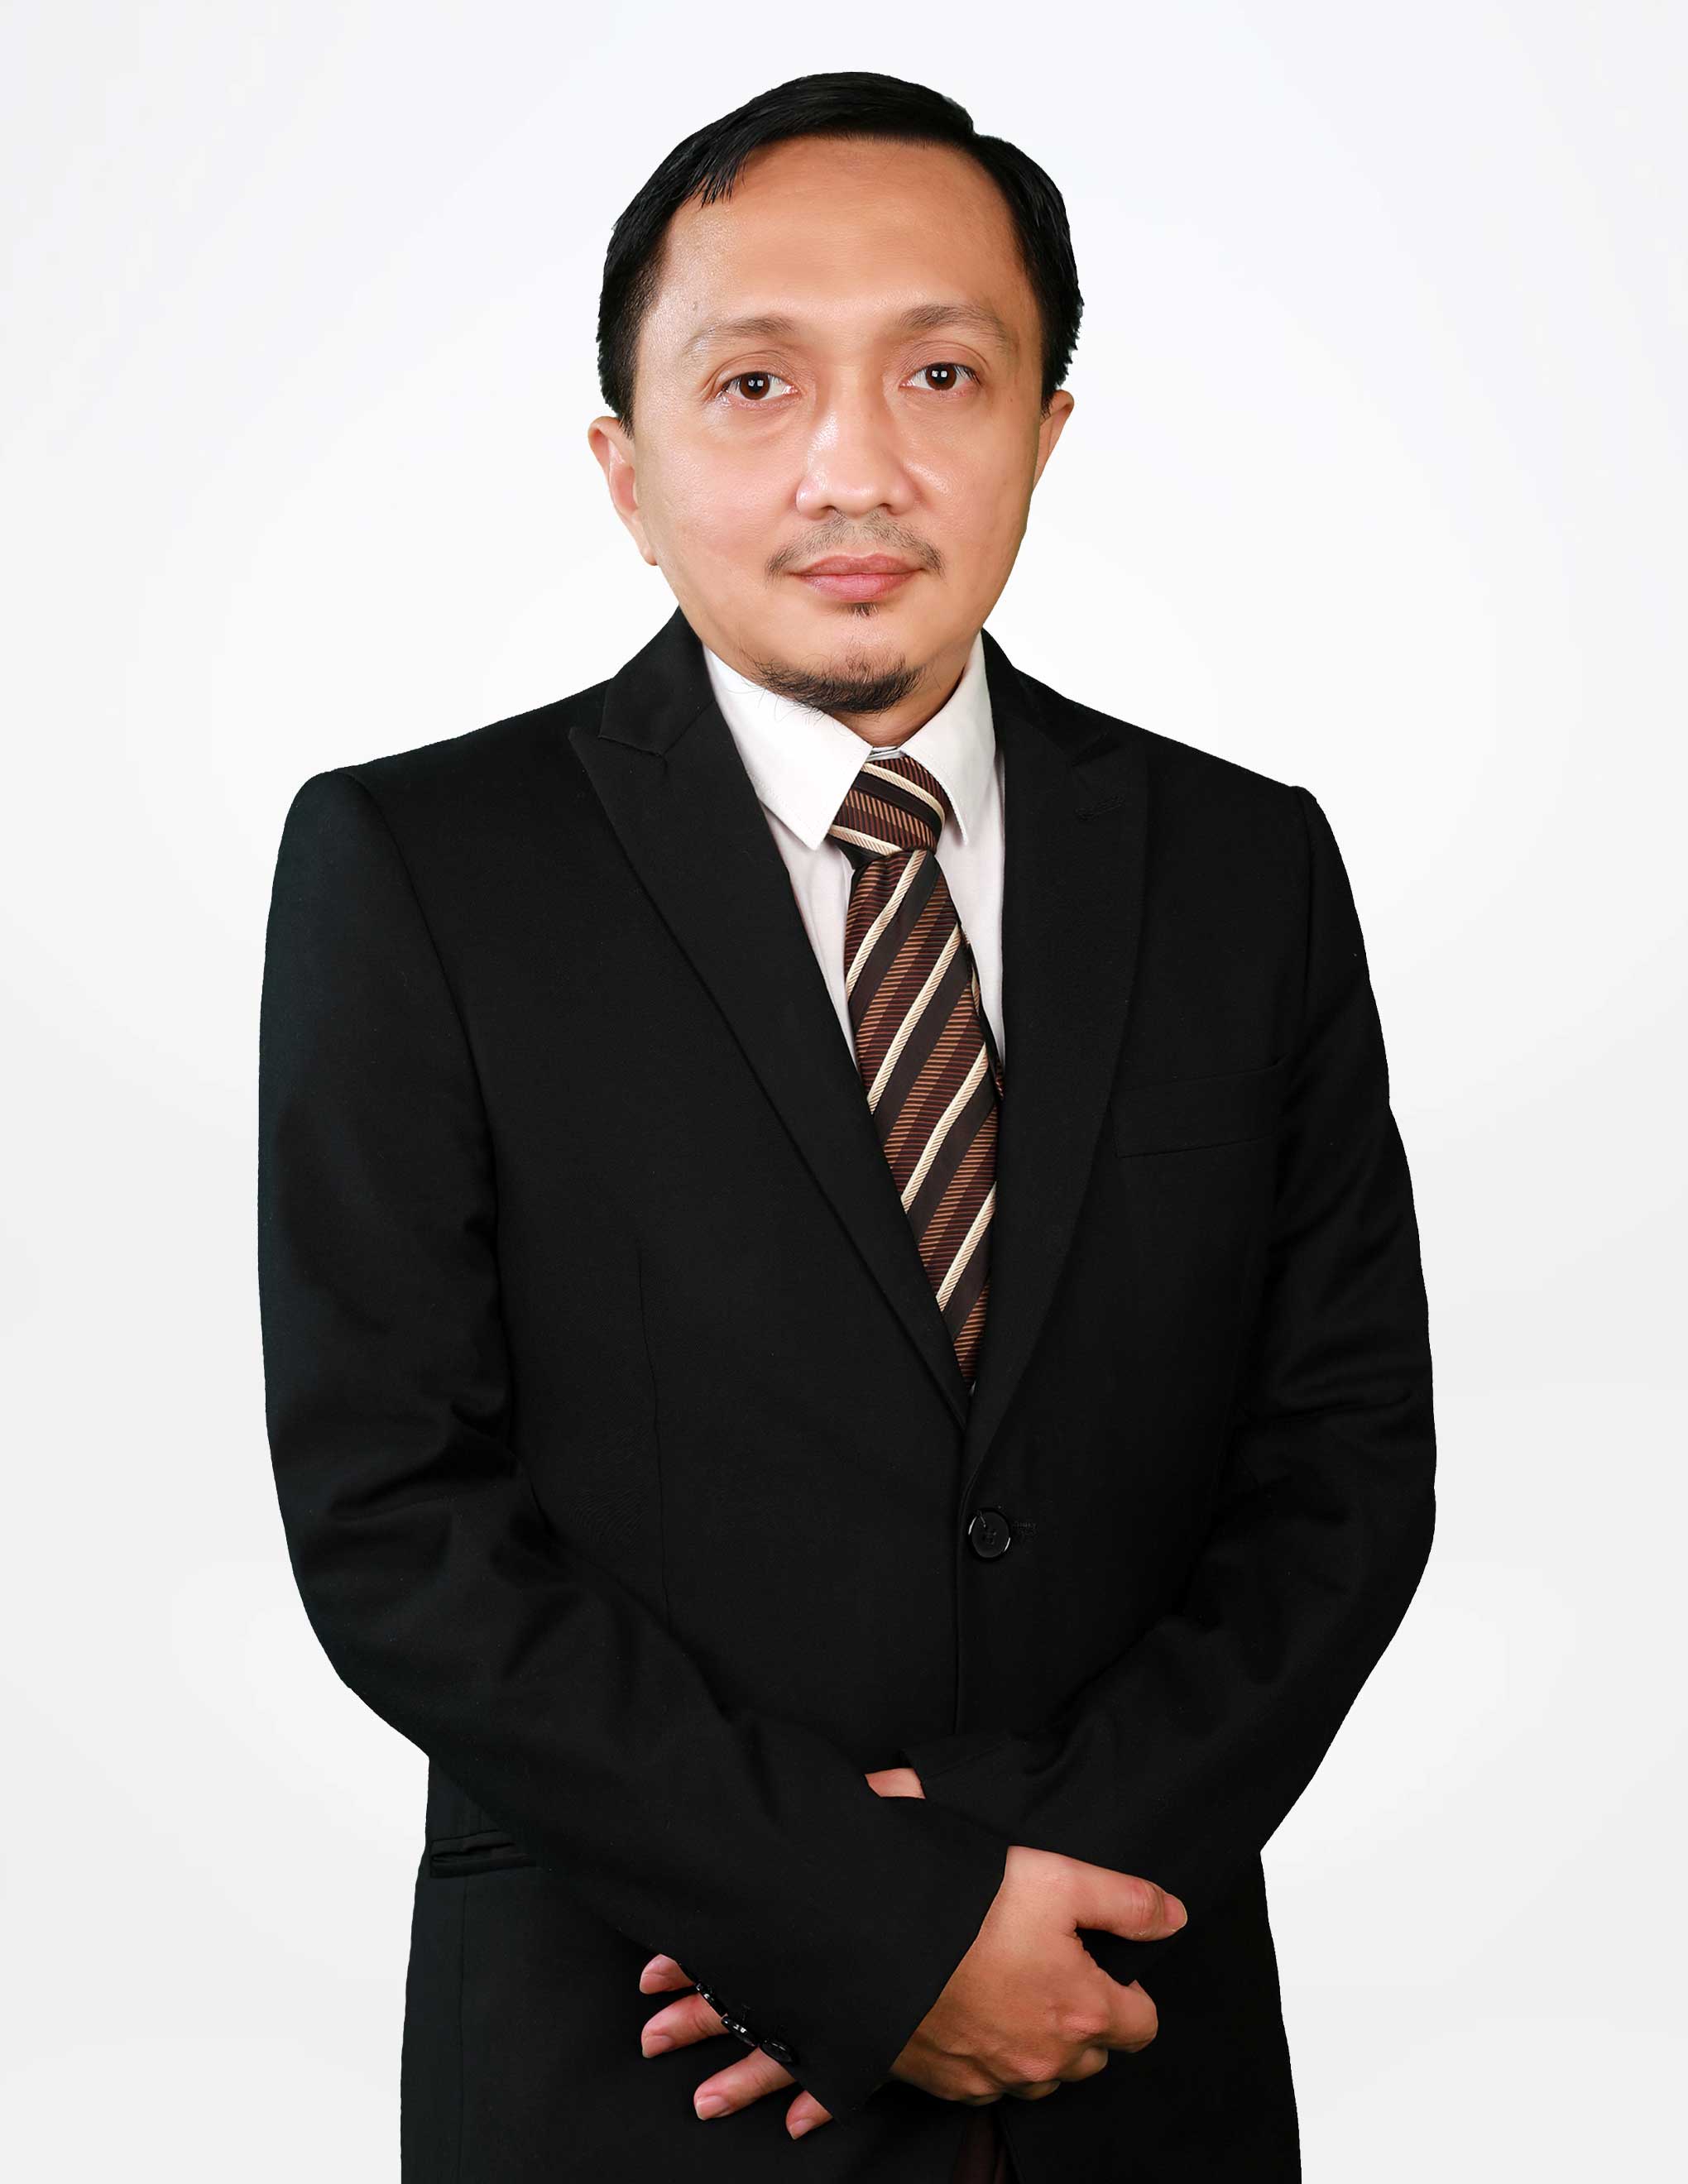 Dr. Ahmad Sufian